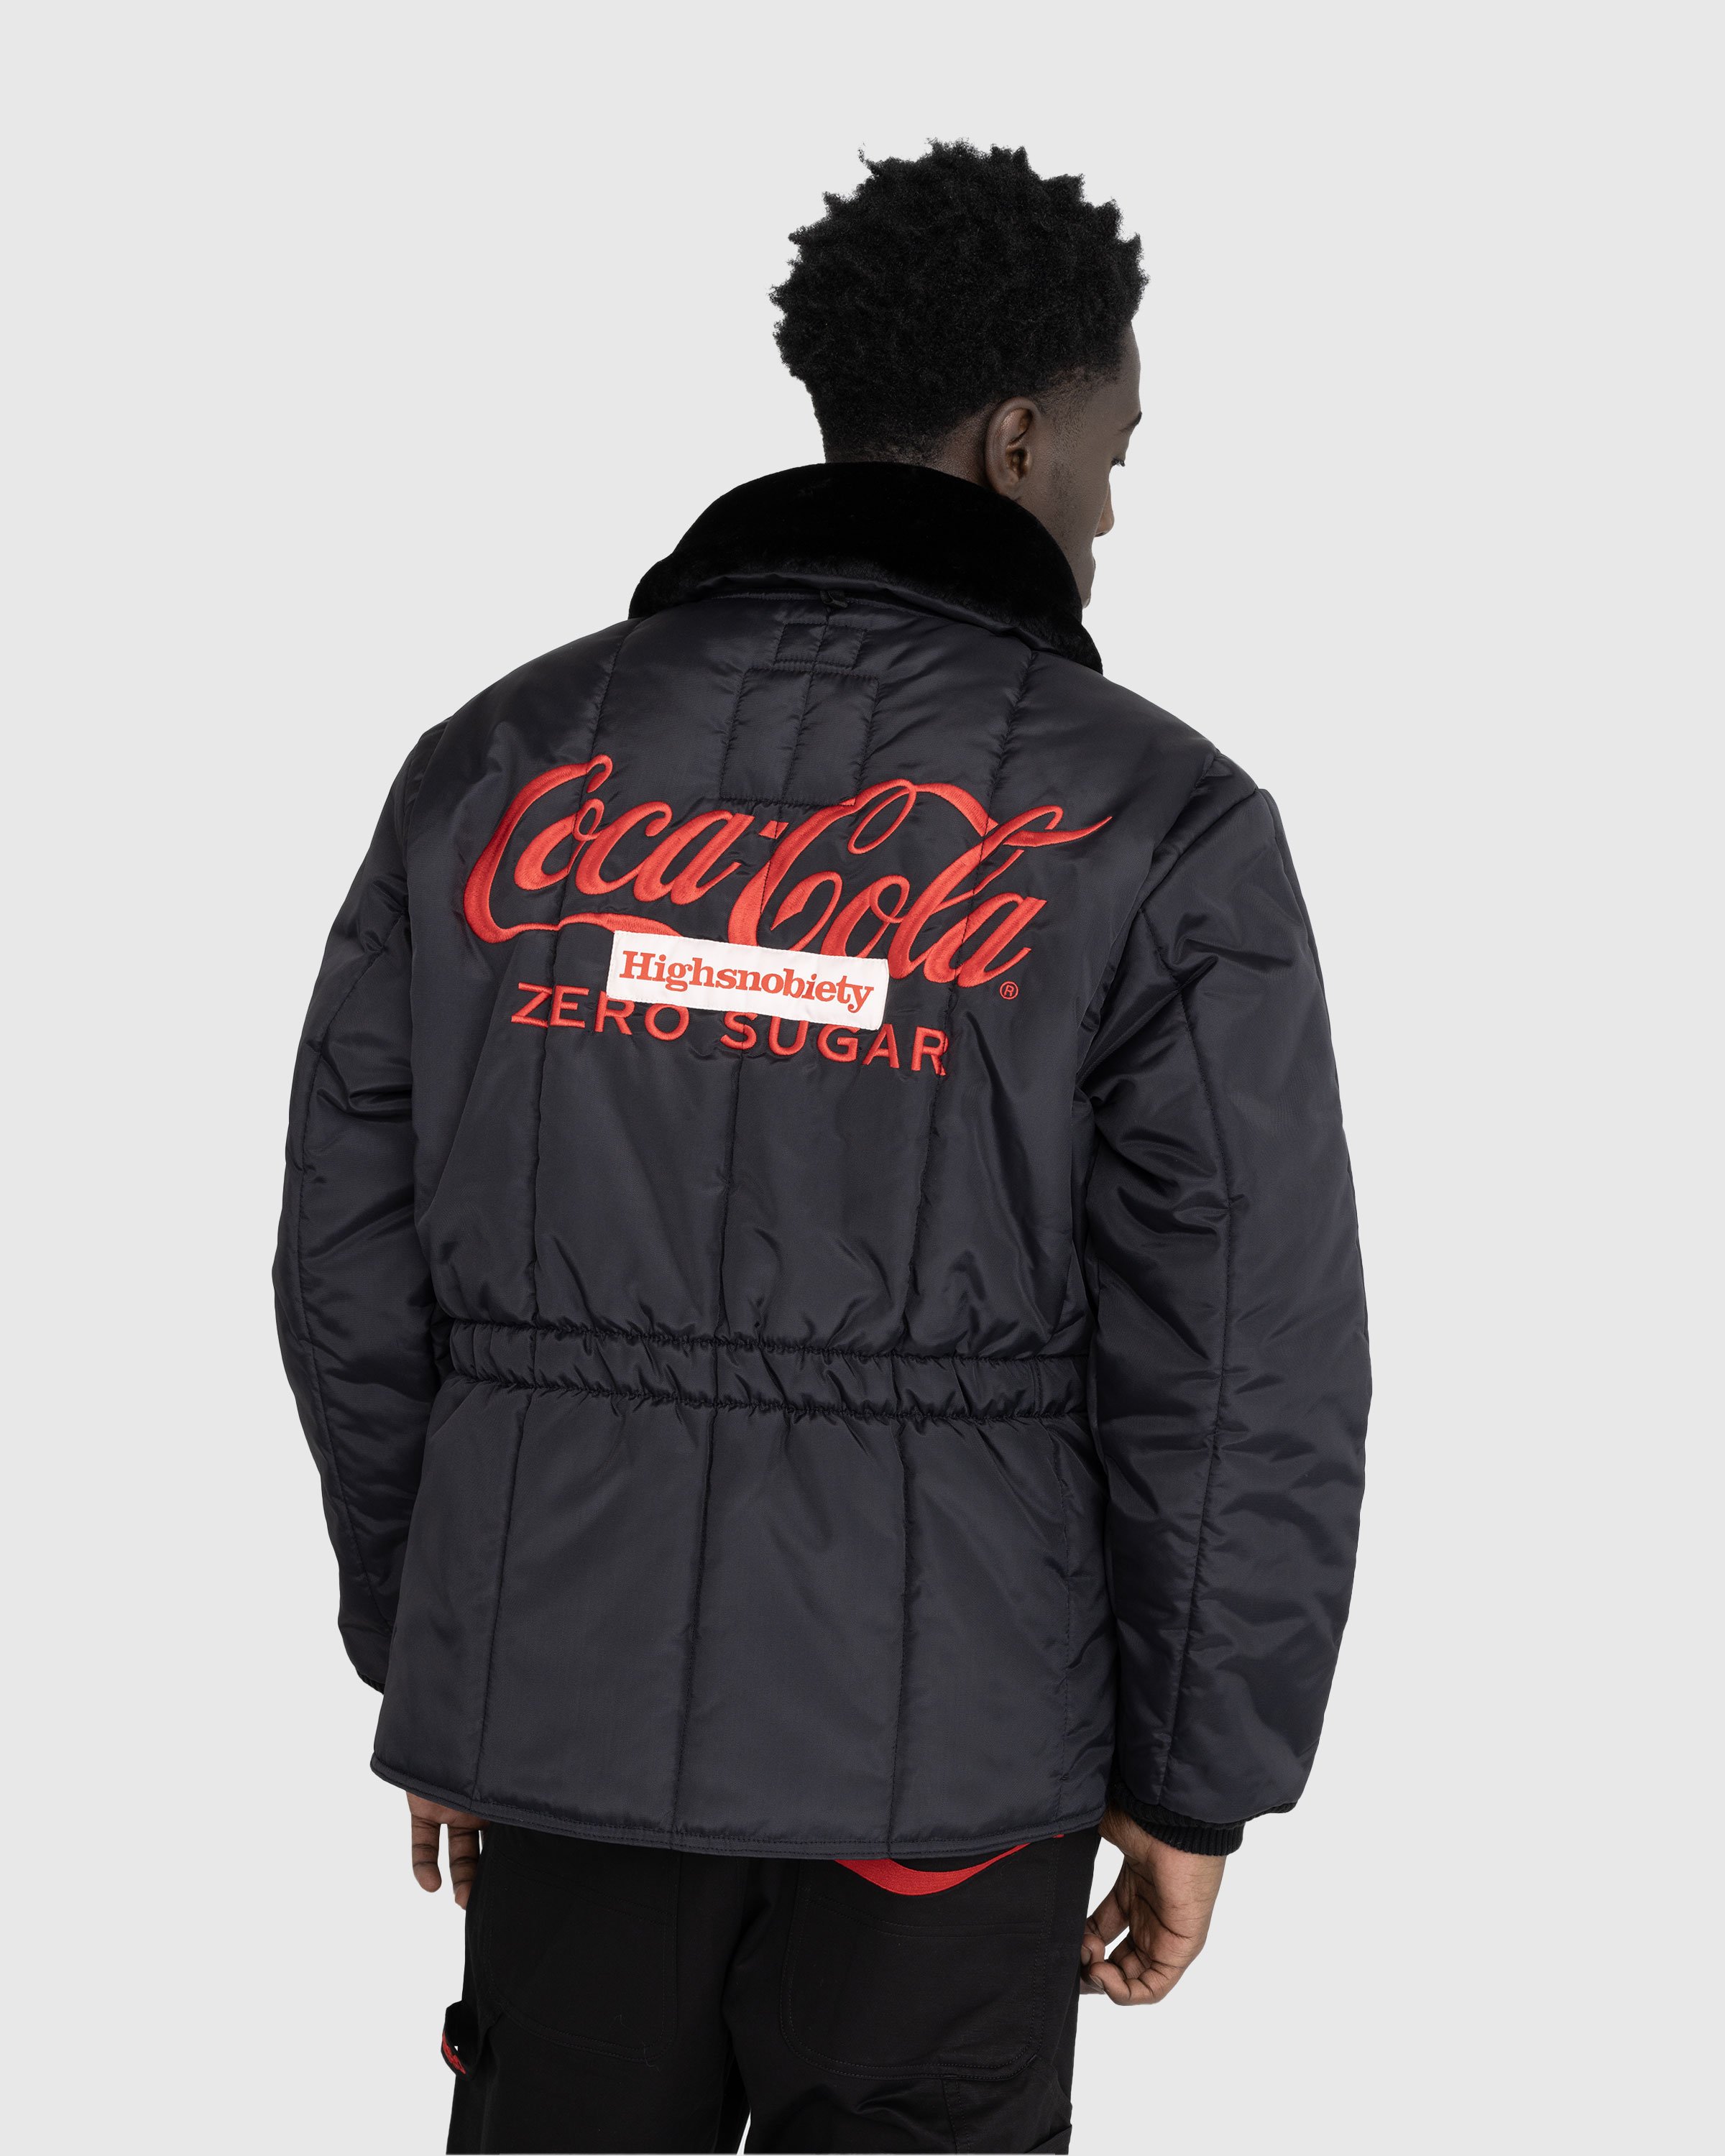 Highsnobiety x Coca-Cola Zero Sugar - RefrigiWear Iron-Tuff® Polar Jacket - Clothing - Black - Image 4